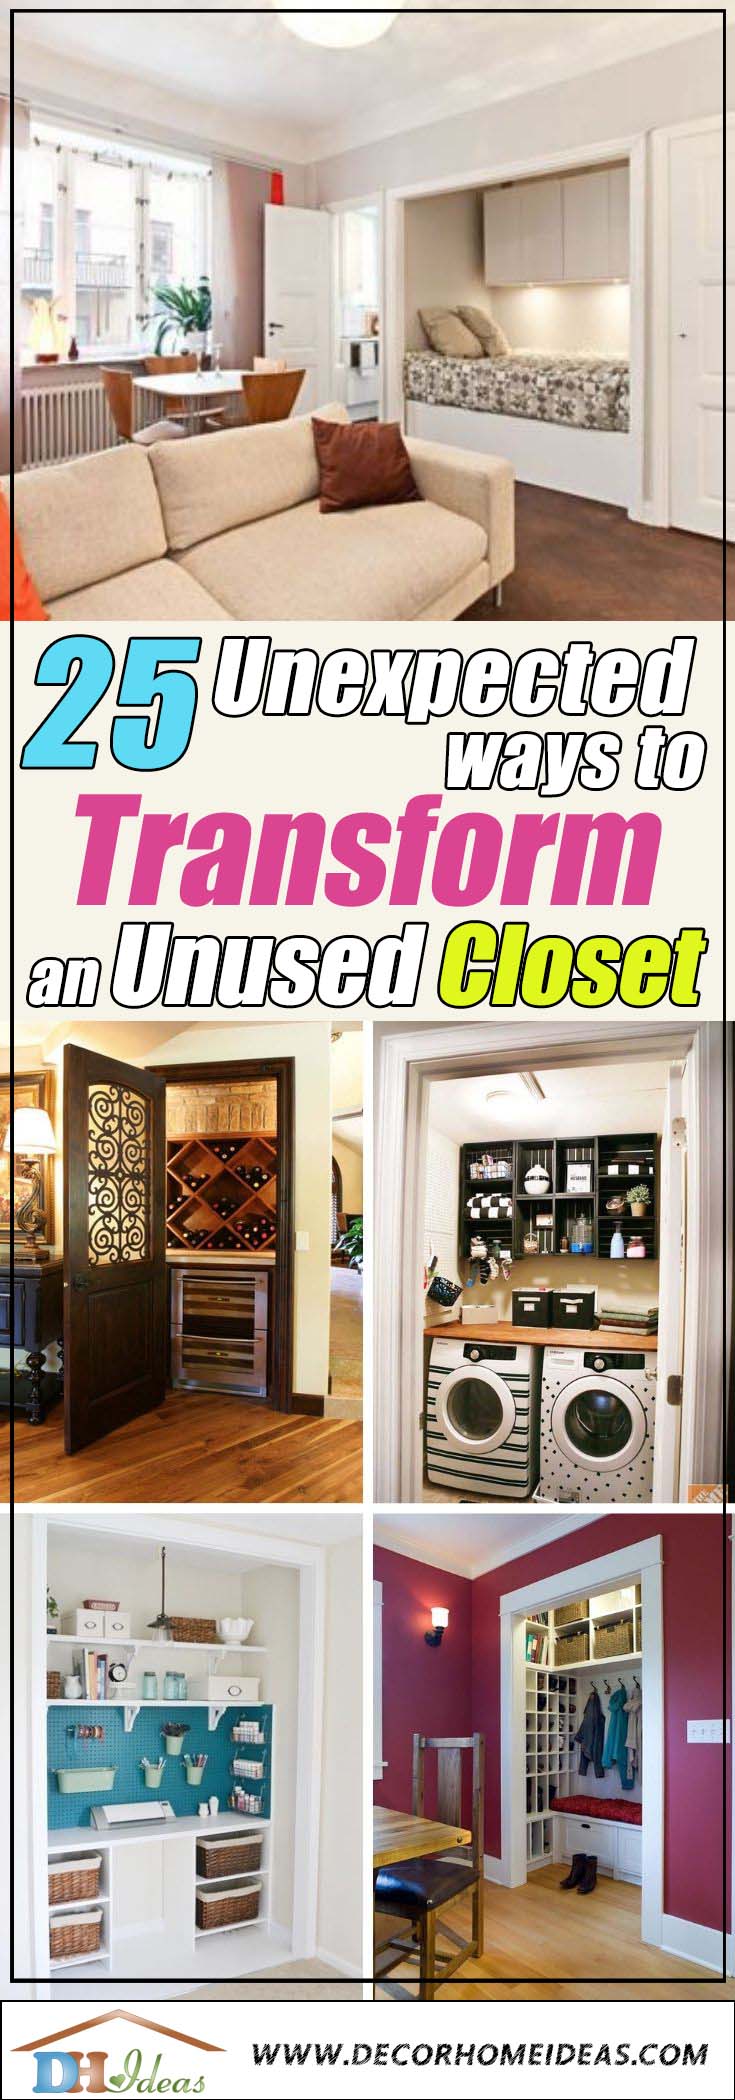 Unexpected Ways To Transform Your Closet #closet #homedecor #decorhomeideas